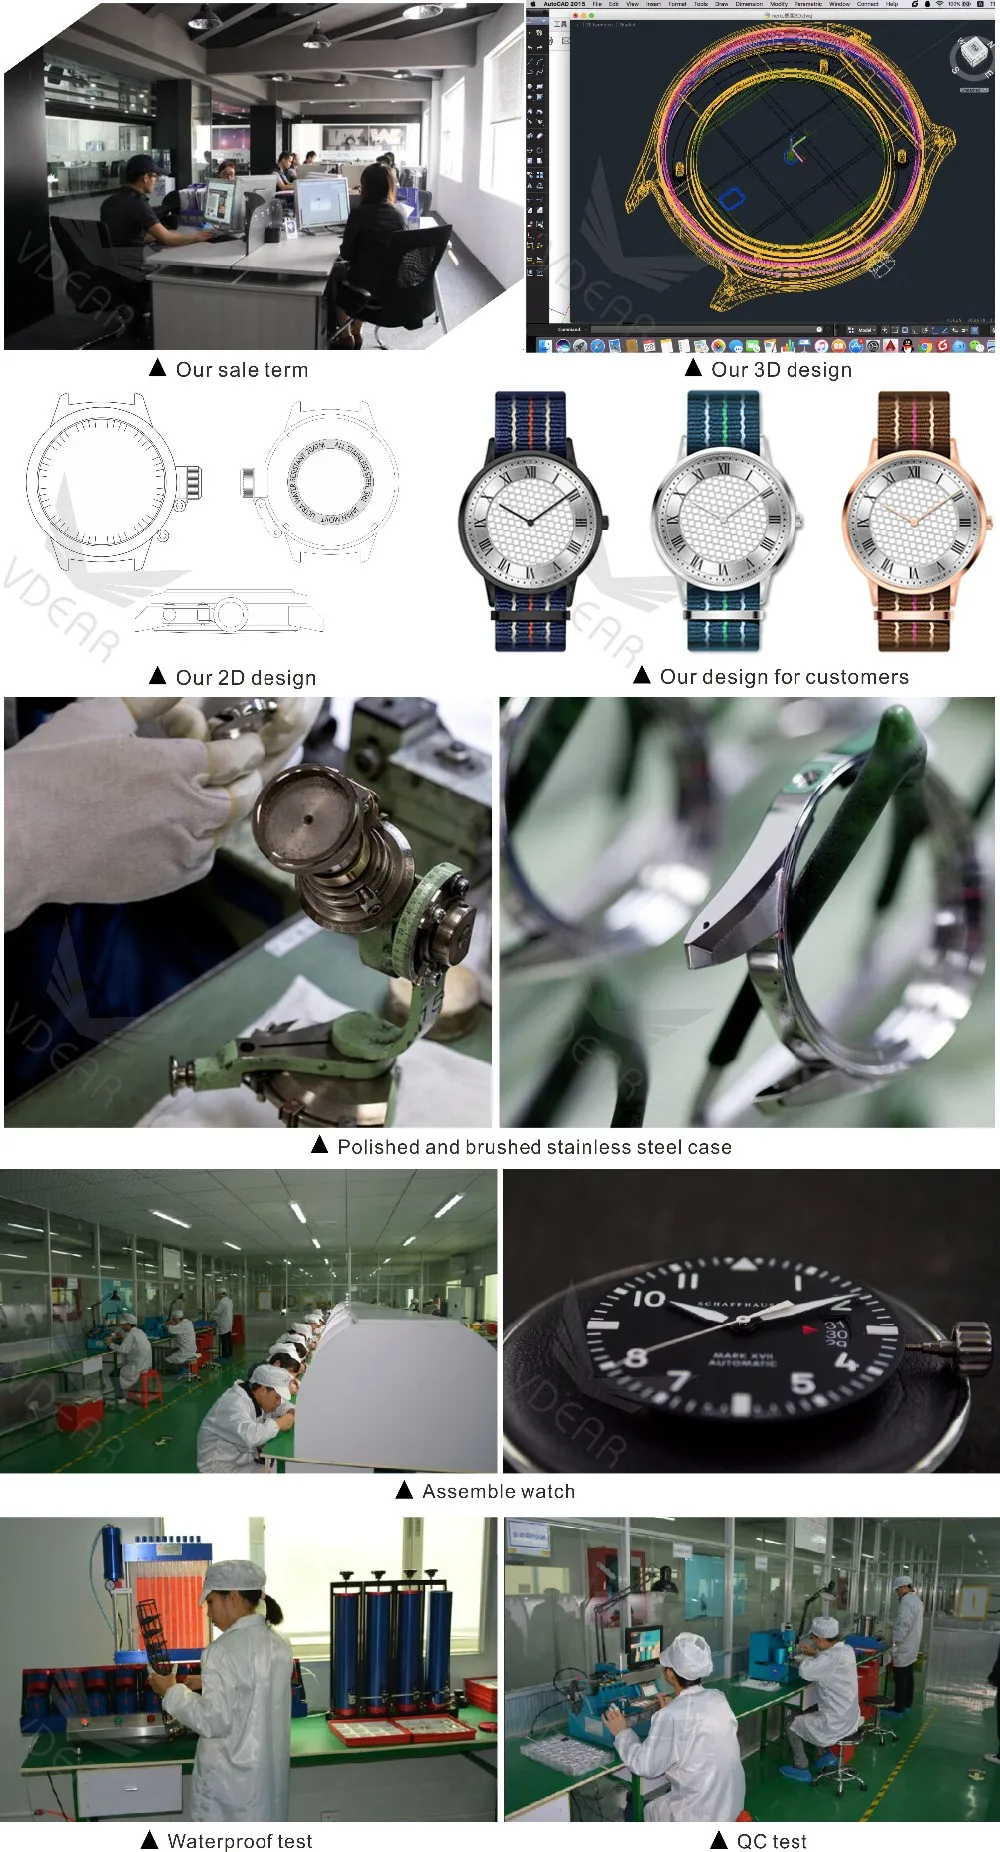 China wholesale cheap custom watches men chrono quartz watches bezel japan movt with sub dials